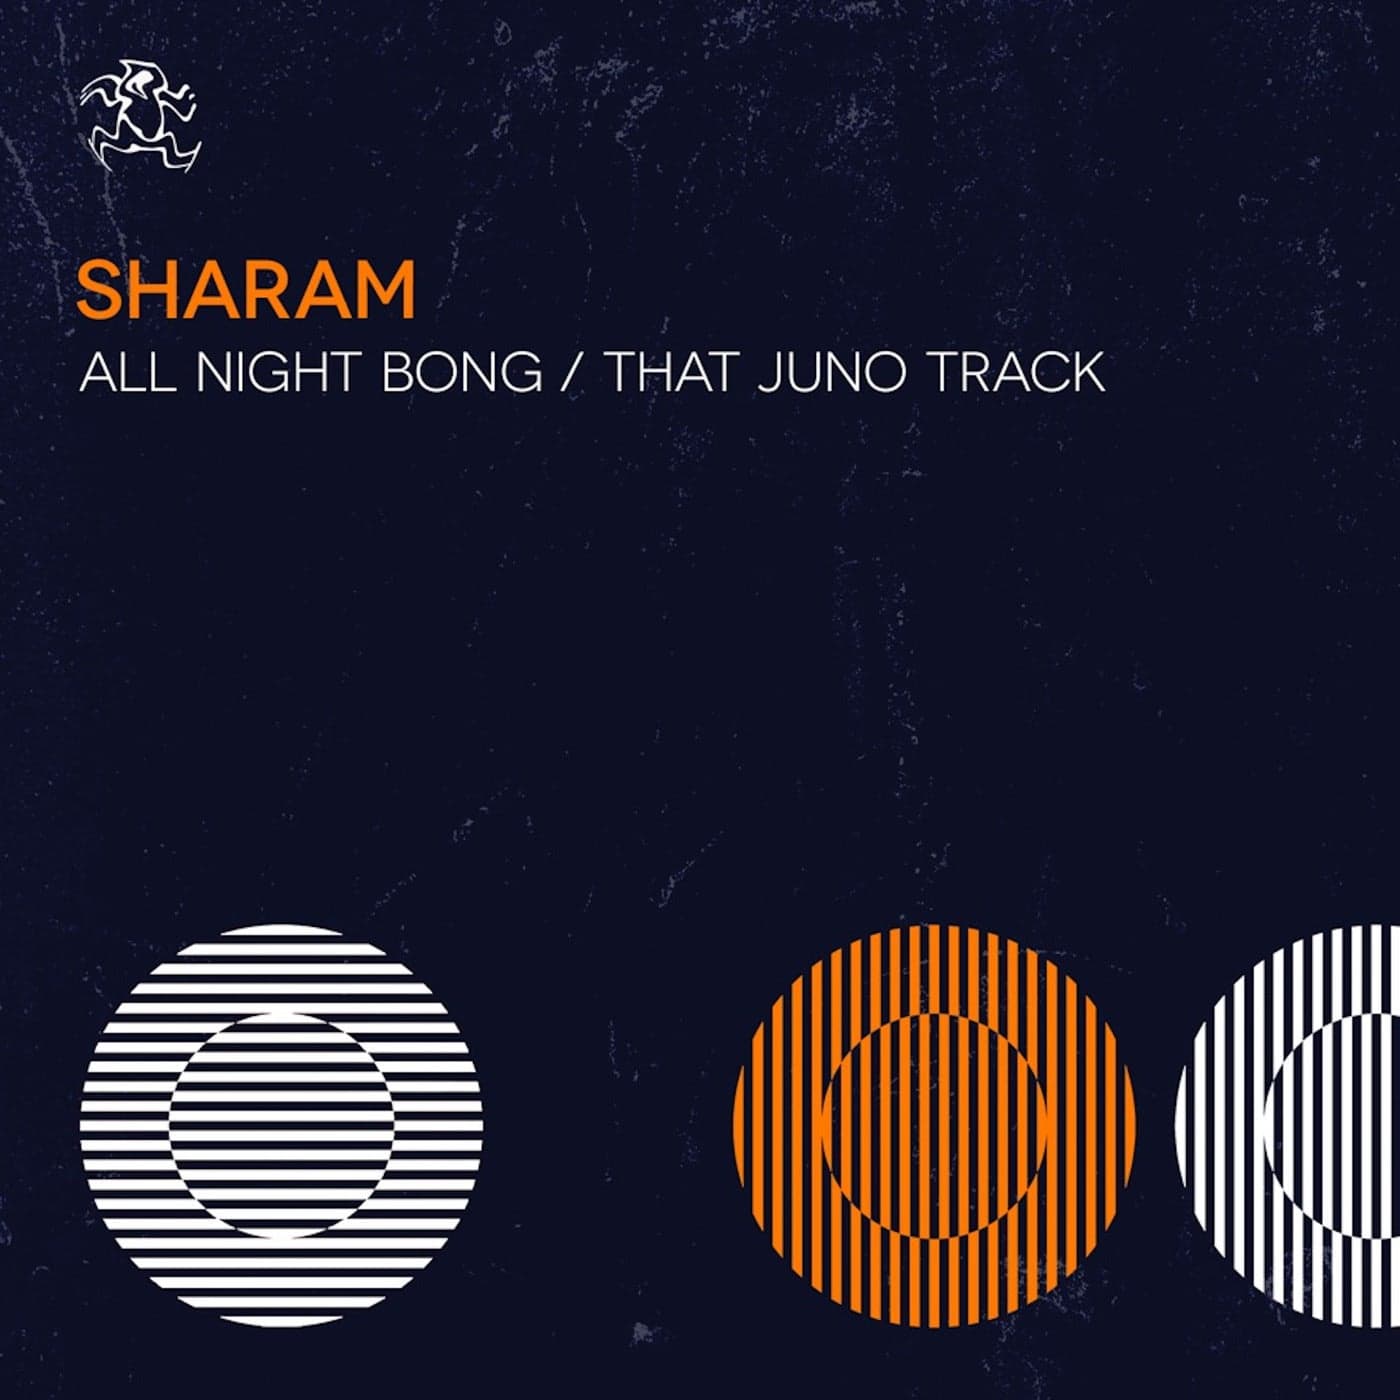 image cover: Sharam - All Night Bong / That Juno Track / YR289